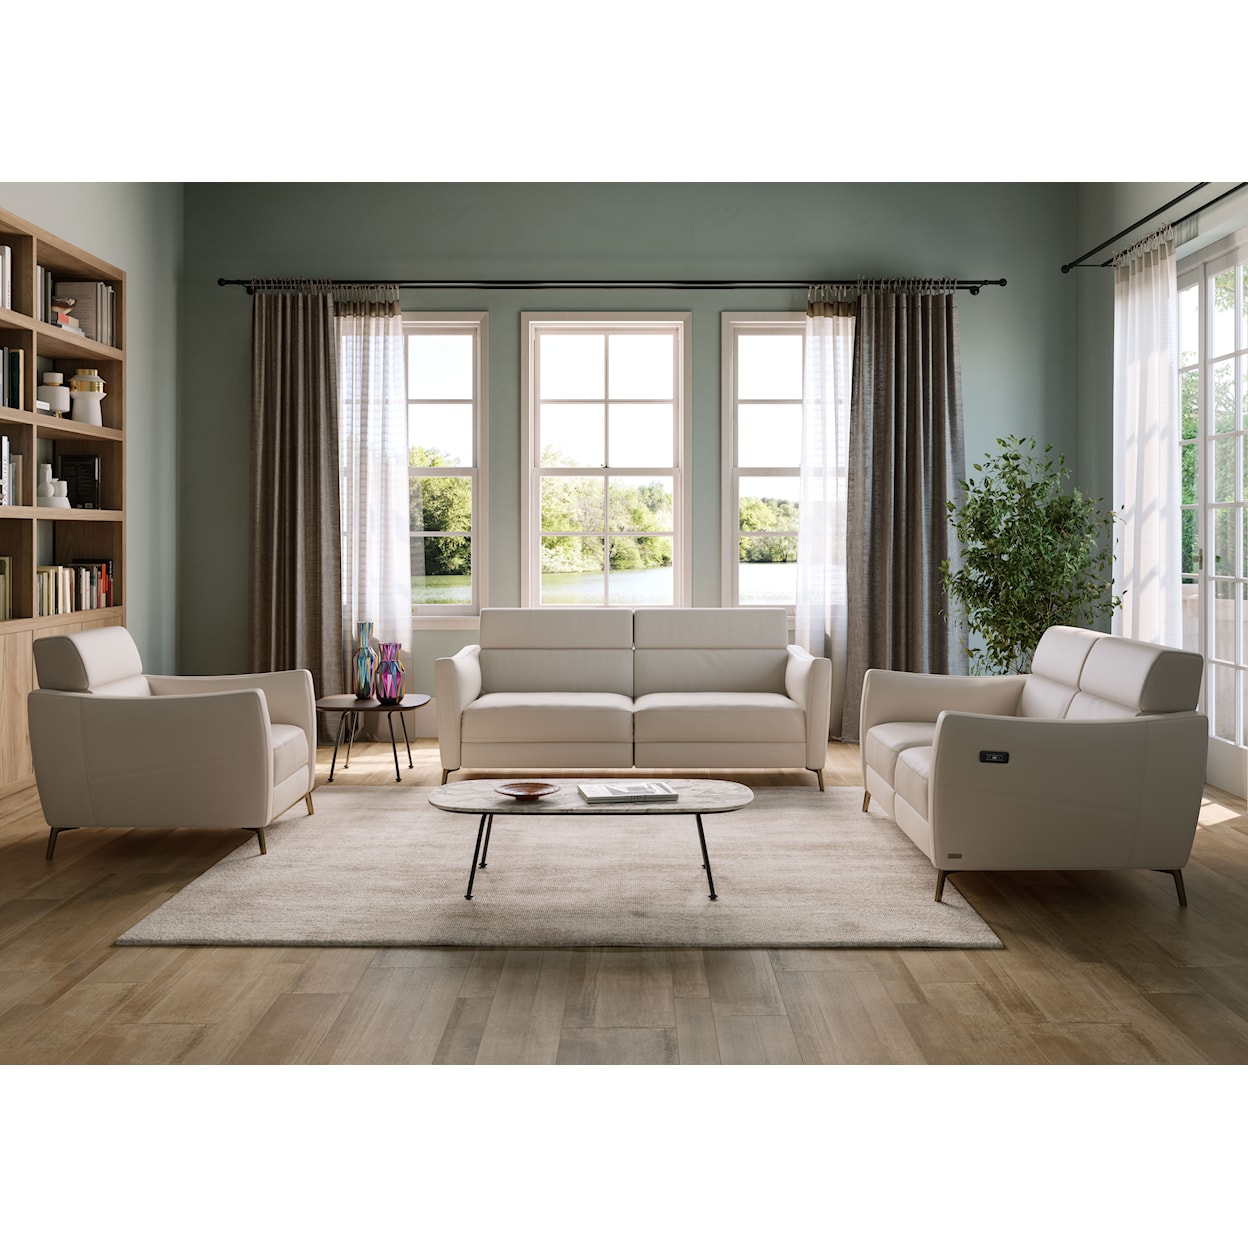 Natuzzi Editions 100% Italian Leather Living Room Group